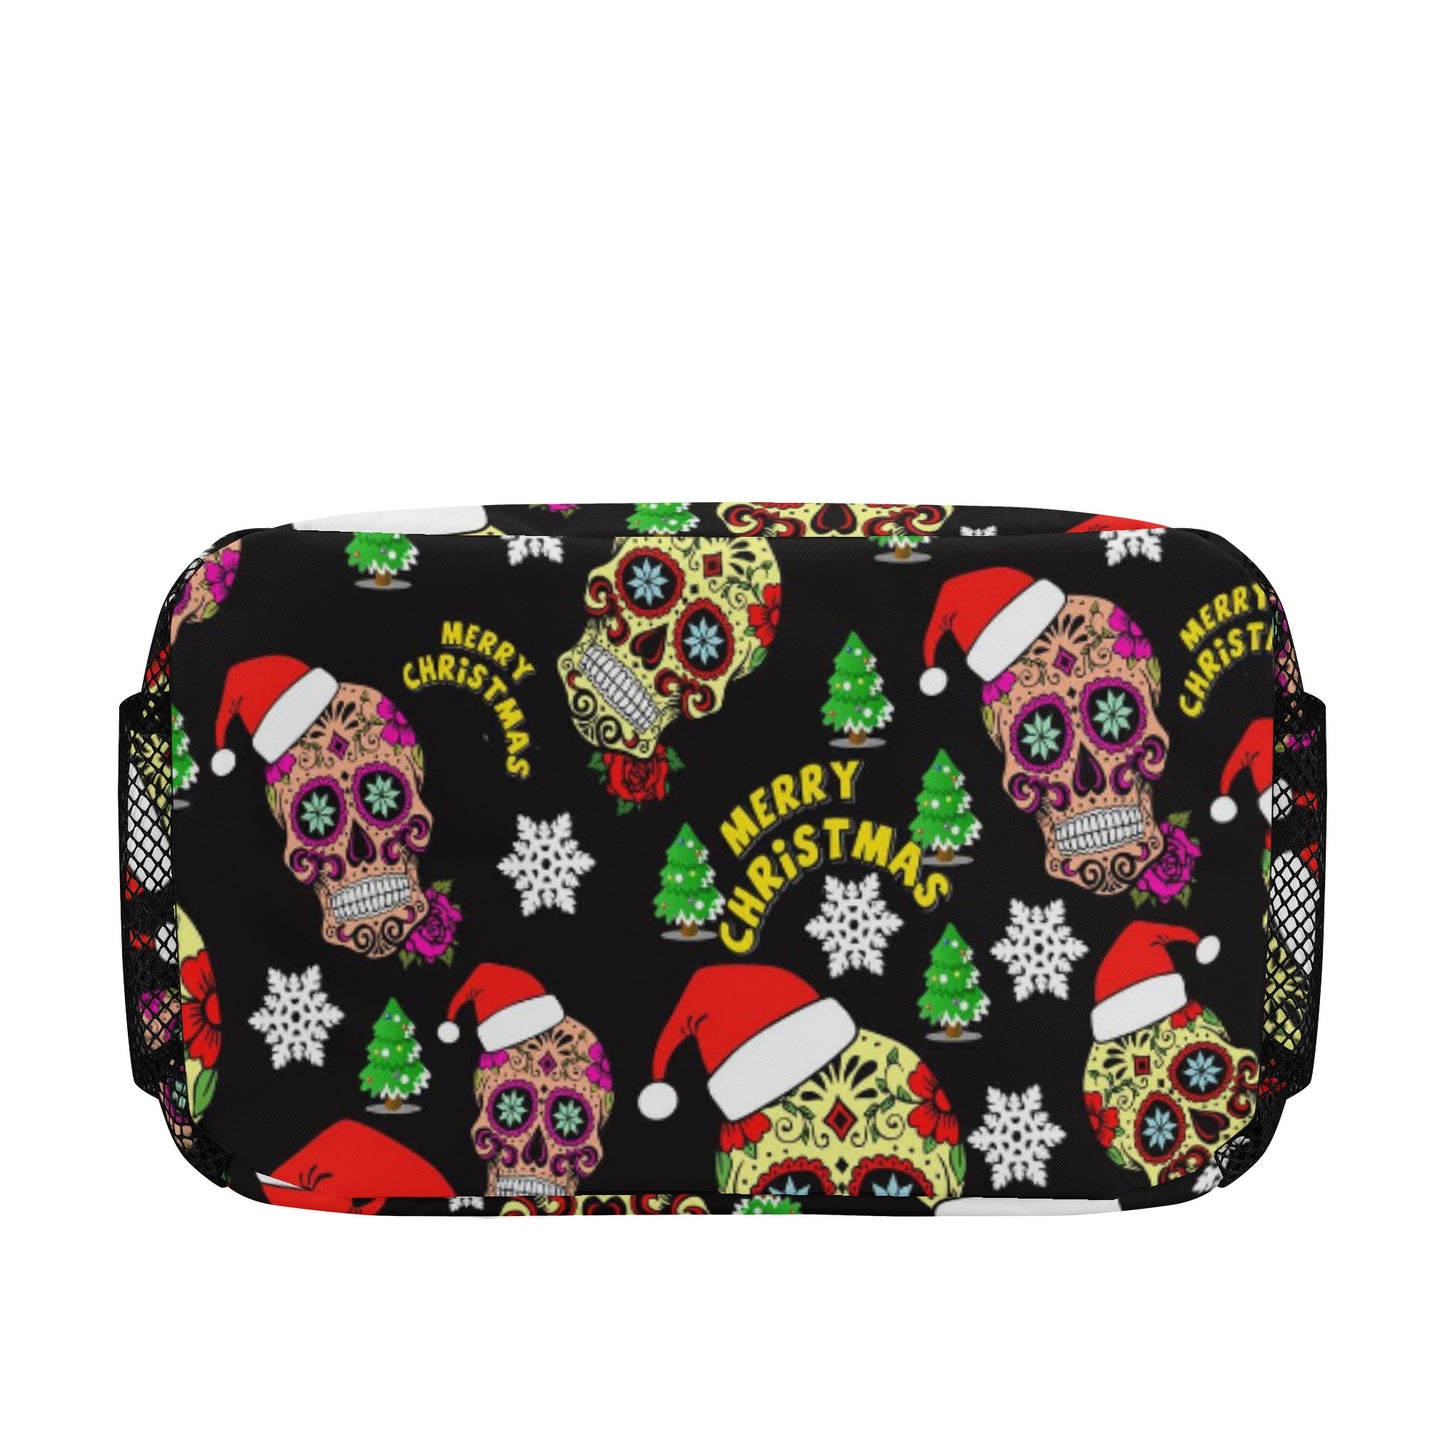 Sugar skull merry christmas Over Printing Lunch Bag